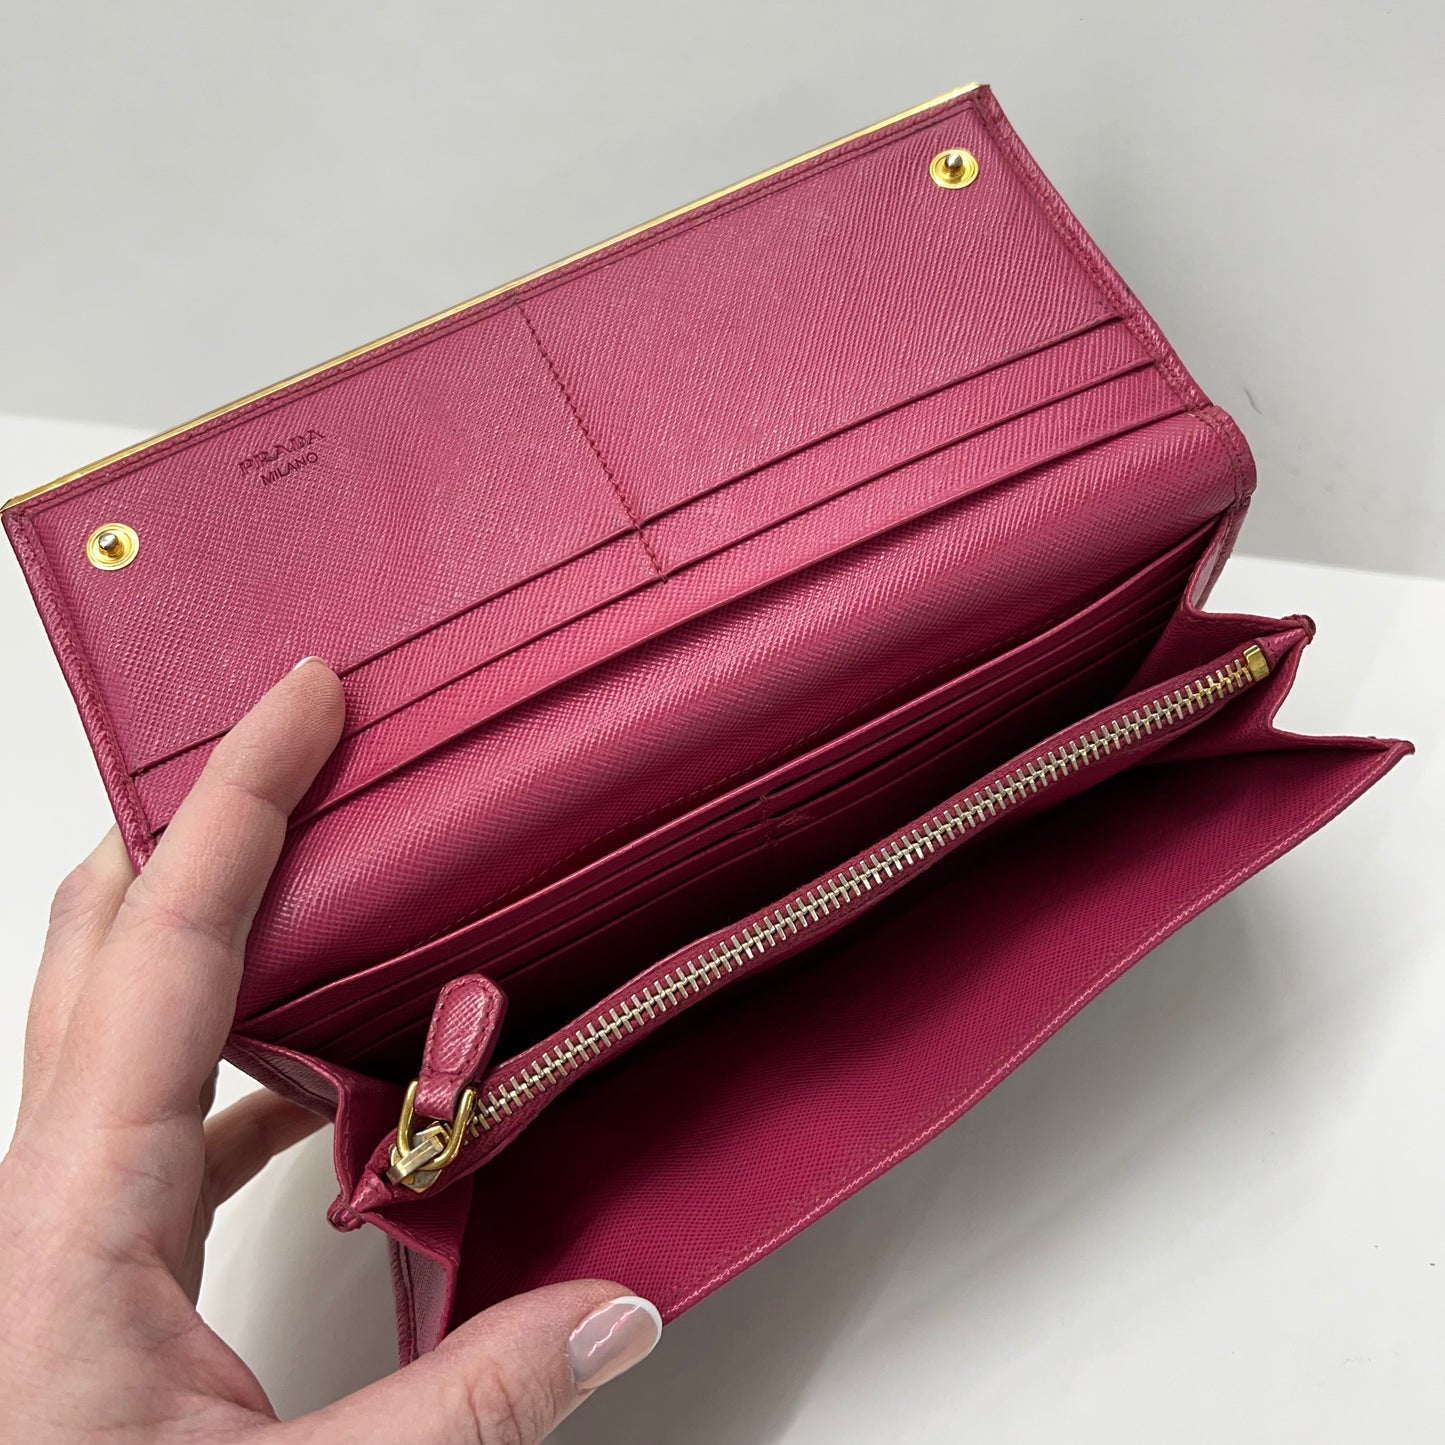 Pre-Loved Prada Saffiano Long Wallet with Pink Interior